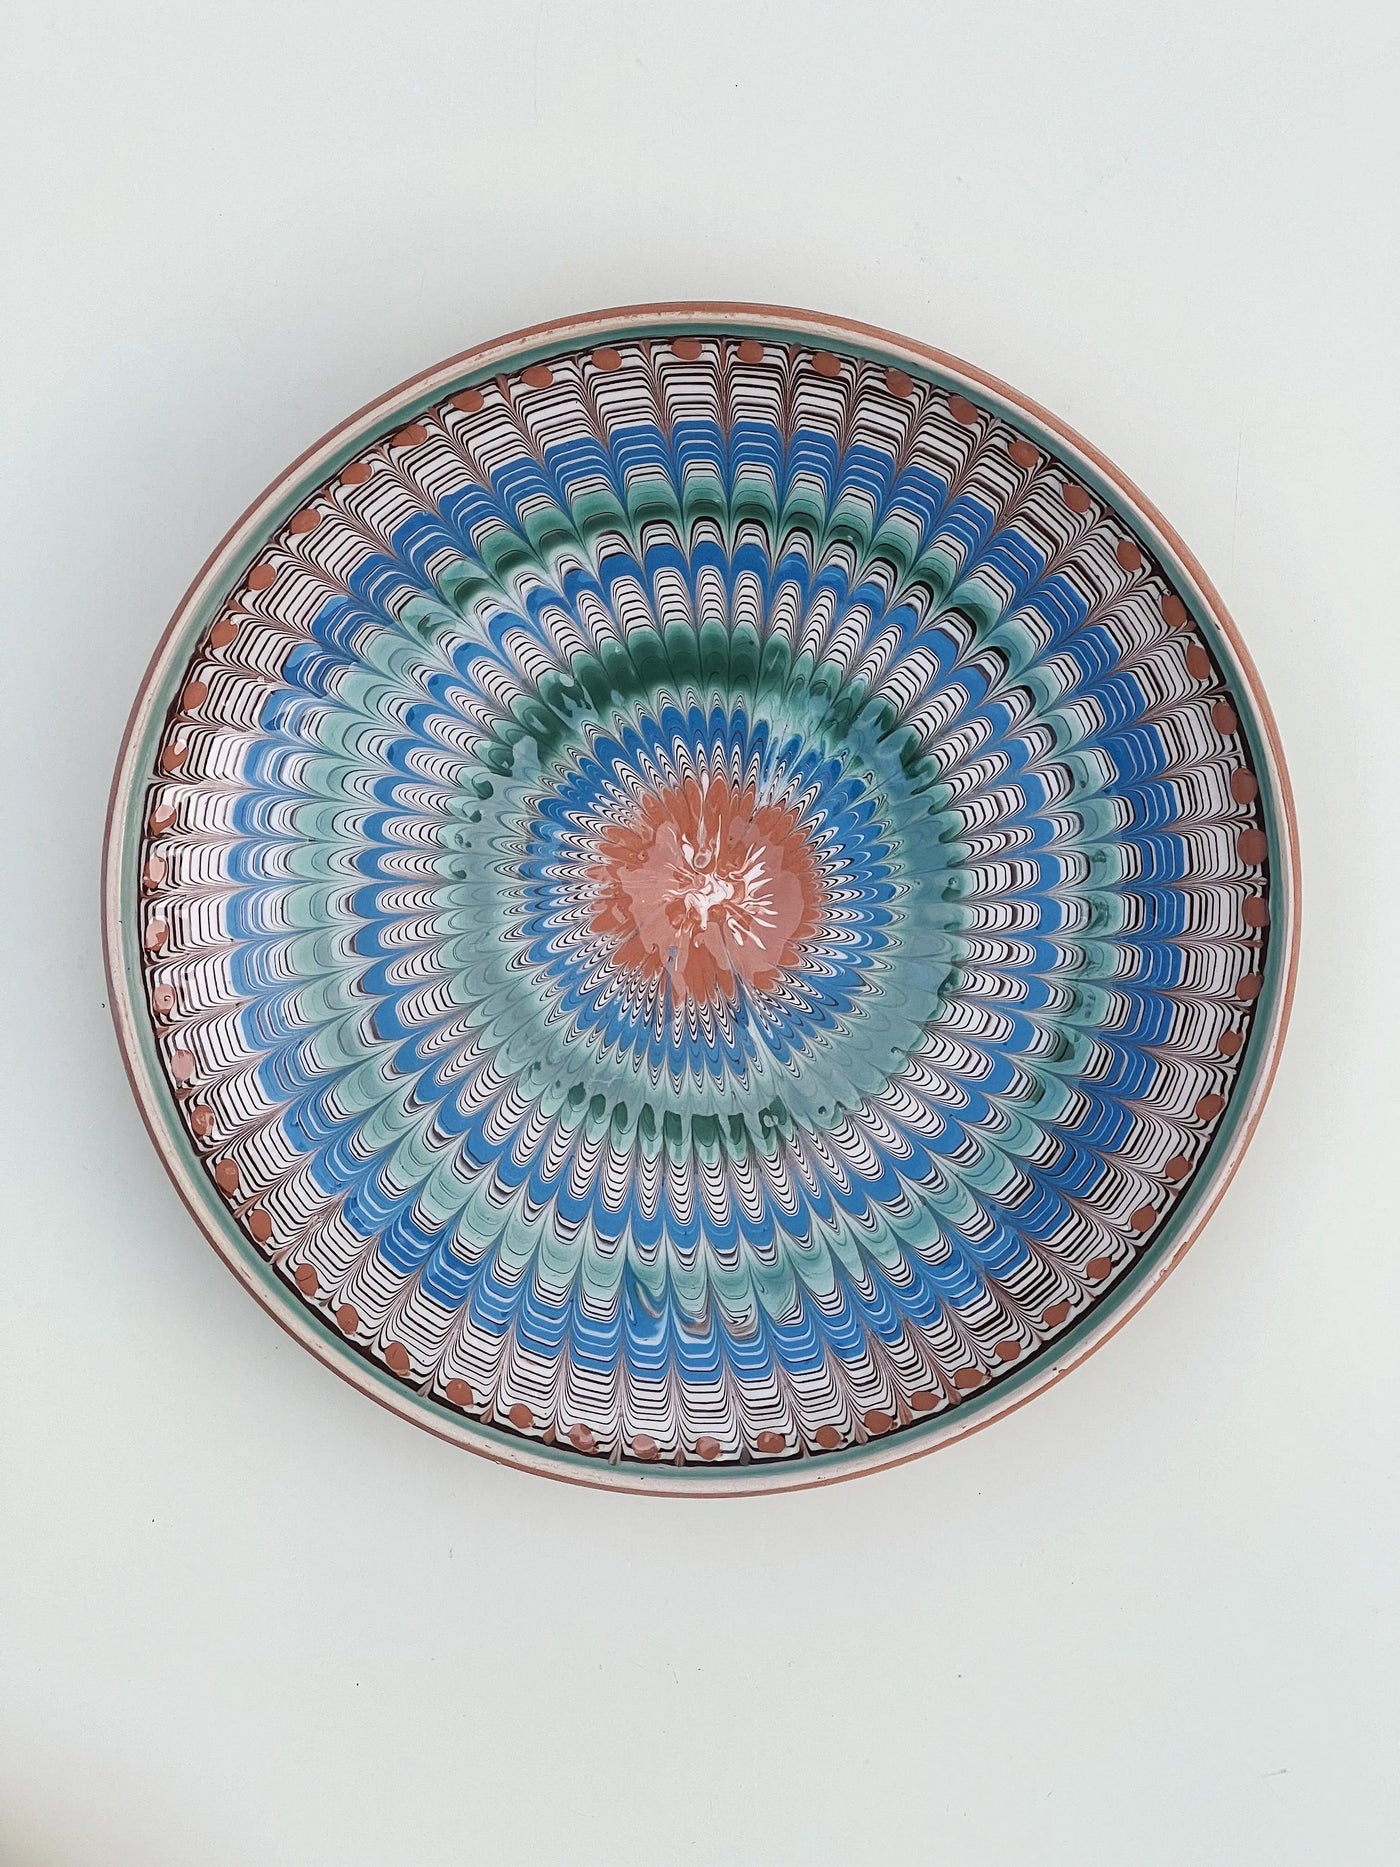 Horezu keramik tallerken | No. 22 | 4 forskellige størrelser Studio Hafnia